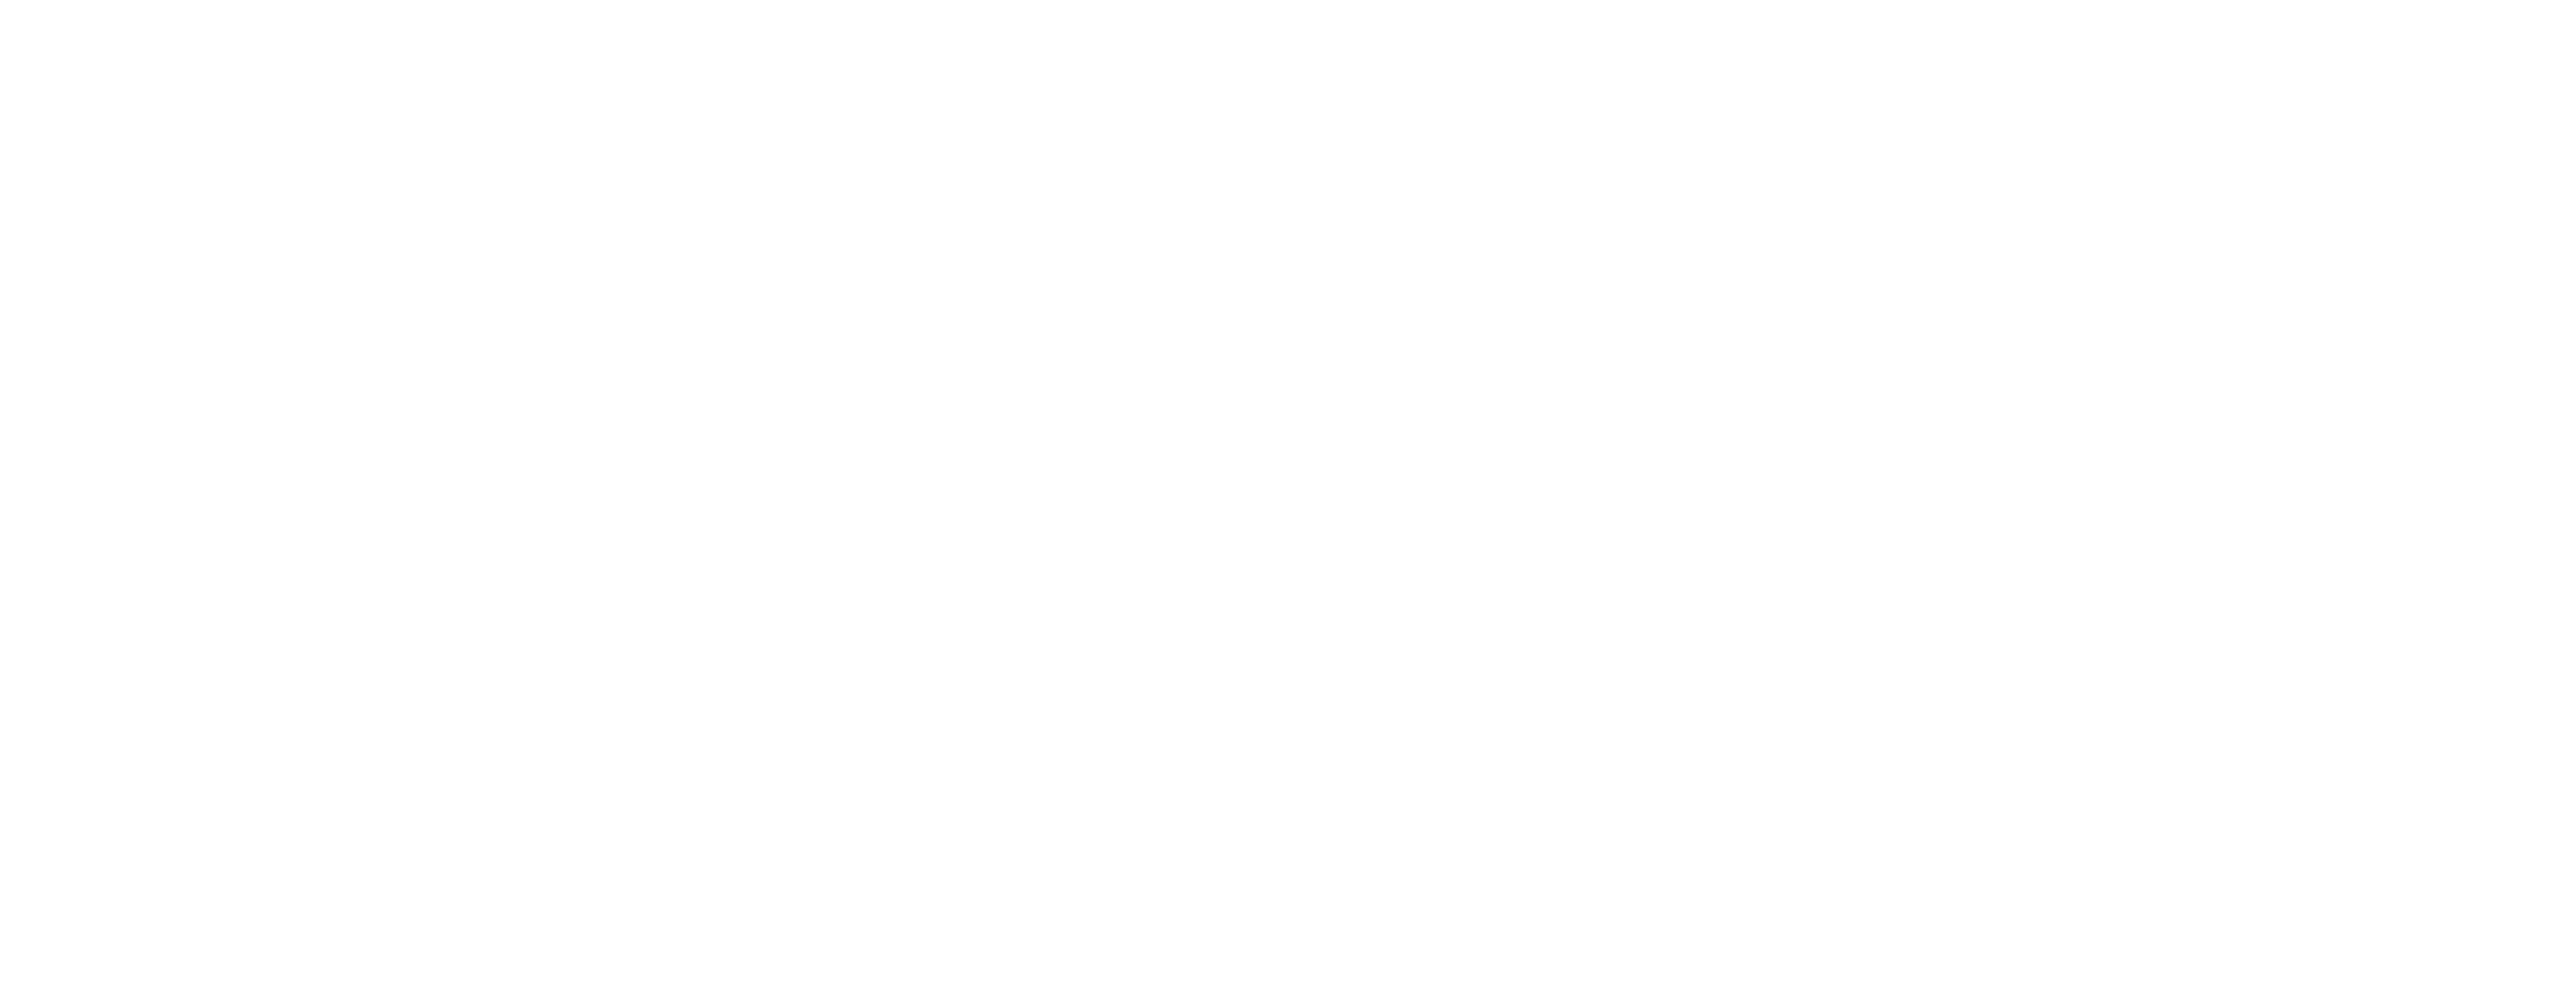 MaineHealth Care at Home logo